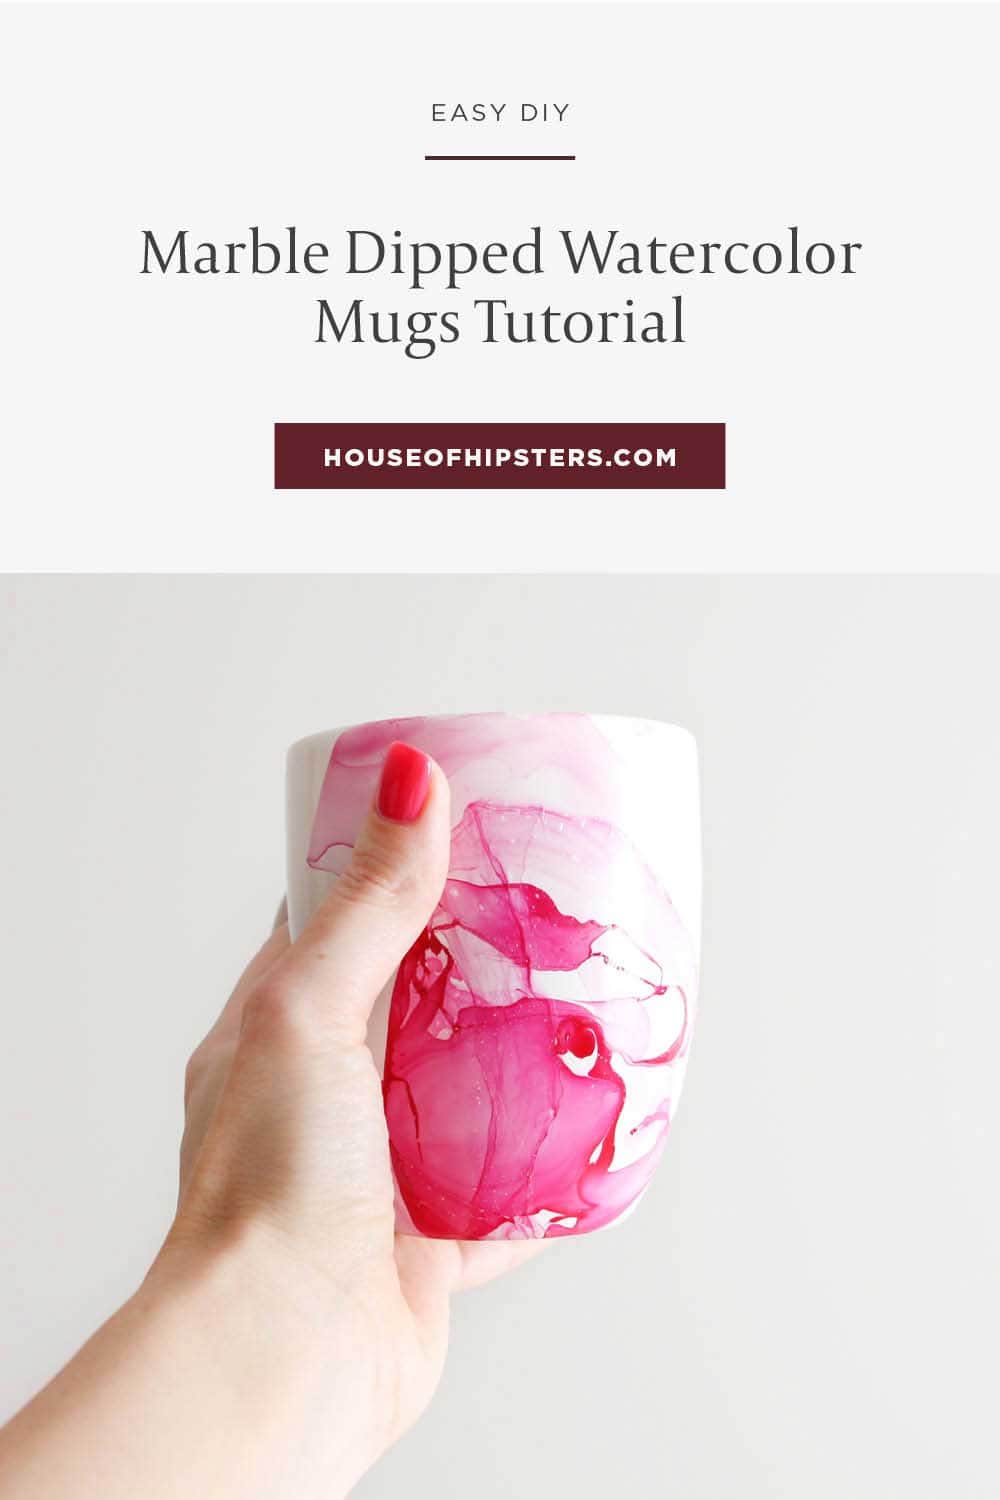 DIY Marbled Mugs an easy craft you can create at home. Transform a plain white mug into a colorful marble mug. 